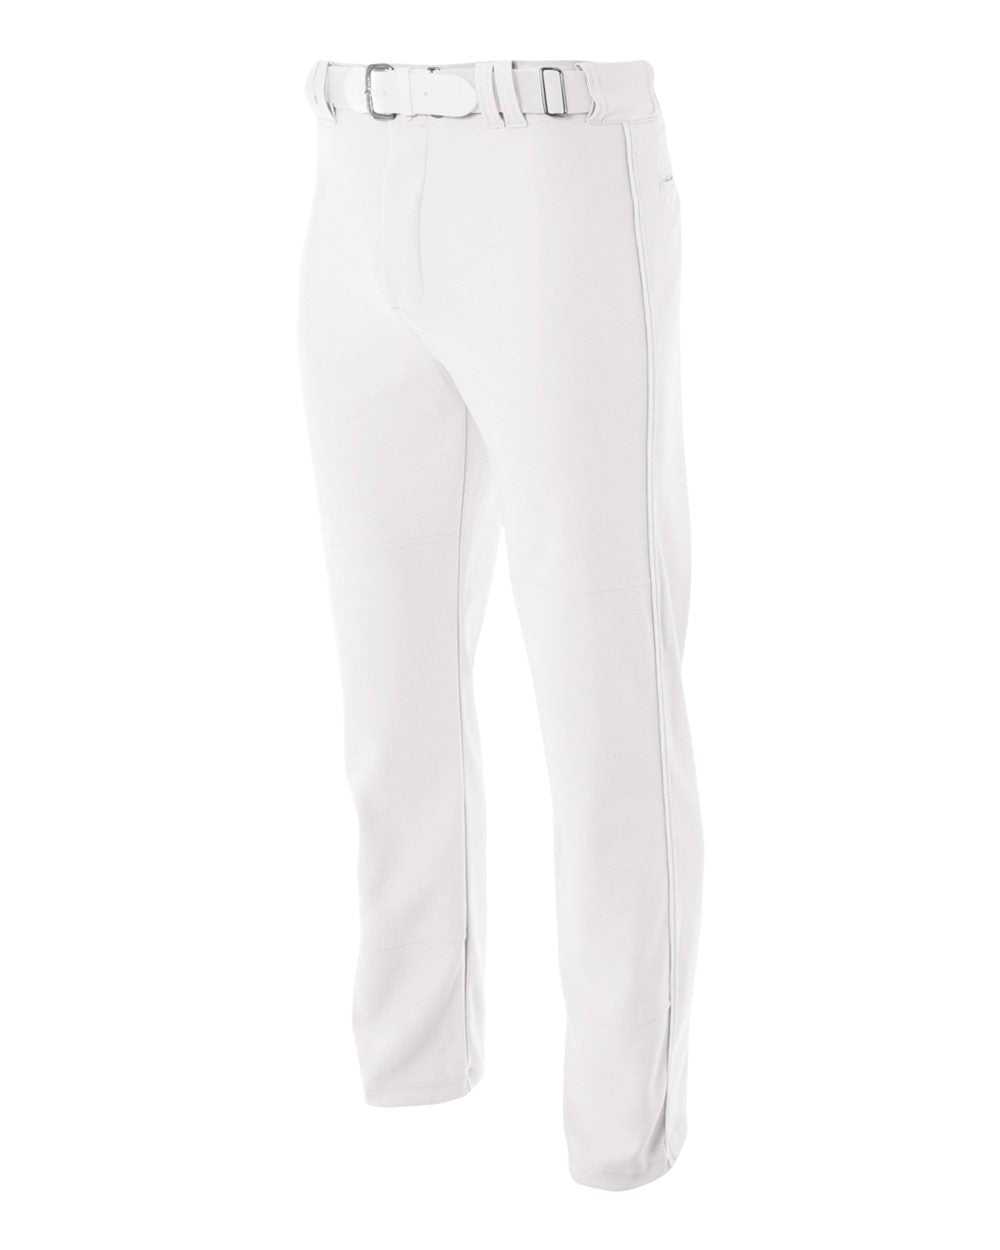 A4 NB6162 Youth Pro Style Open Bottom Baggy Cut Baseball Pants - White - XS